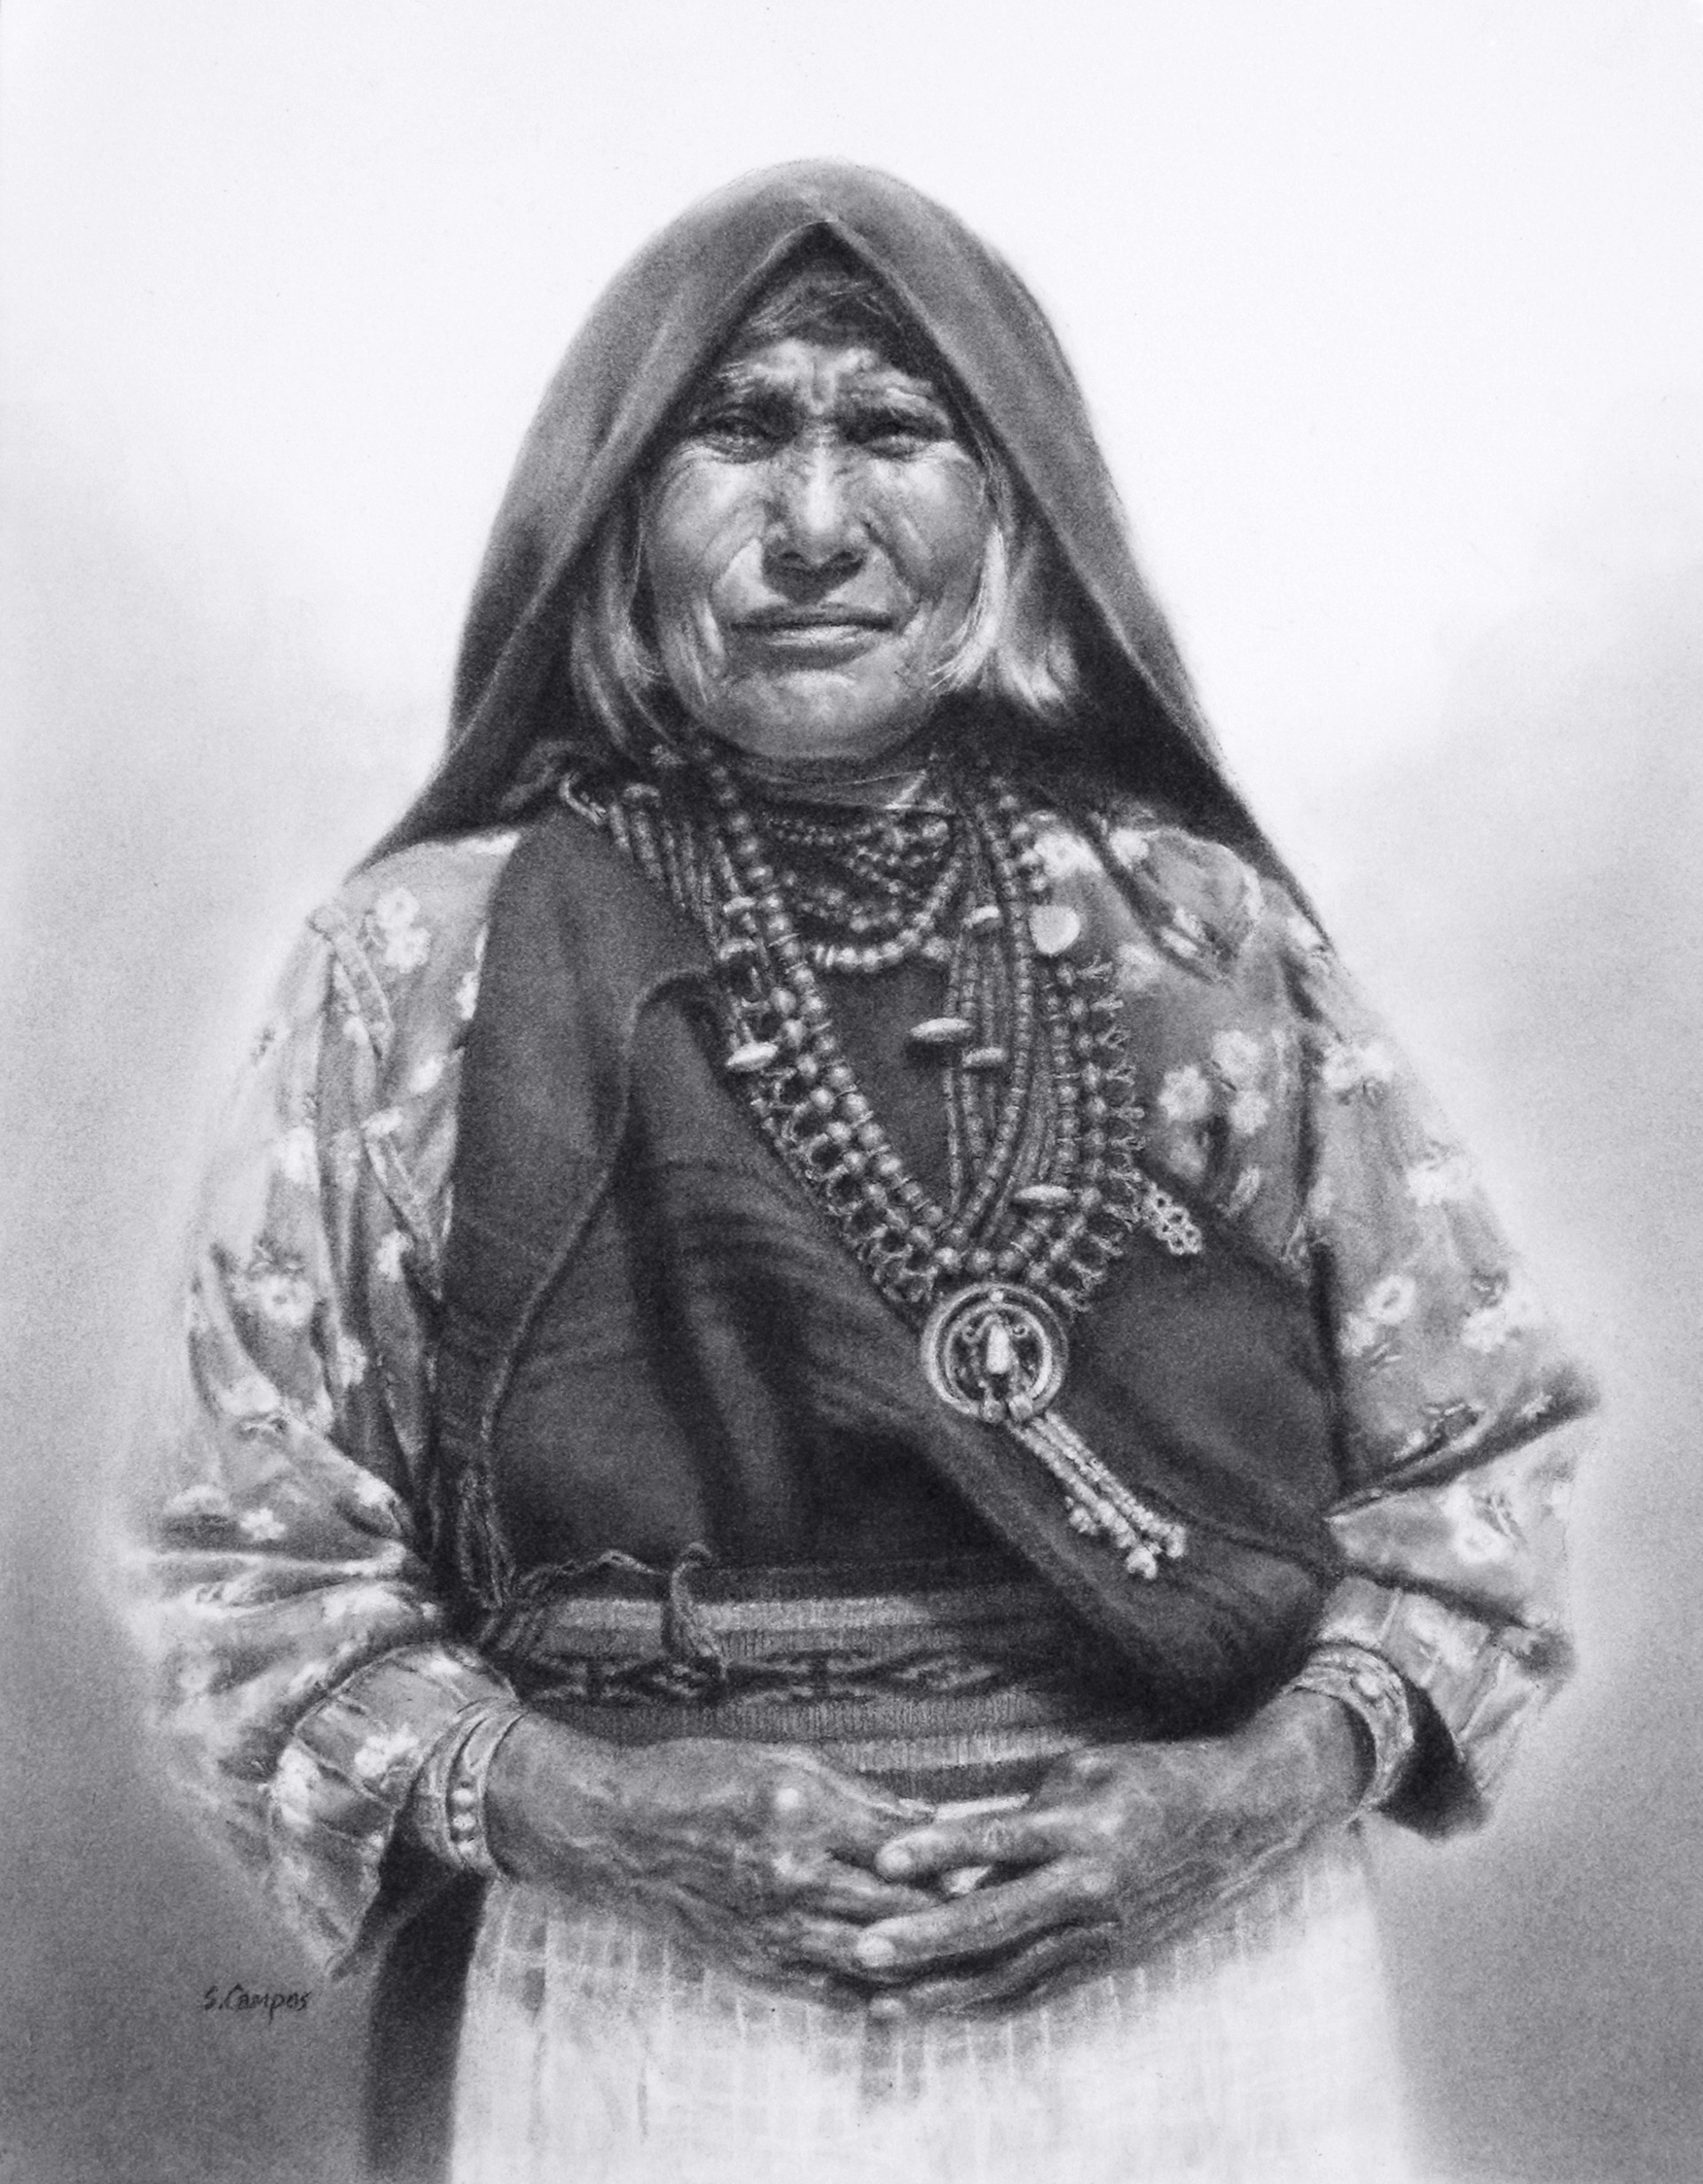 Acoma Woman by Stephanie Campos